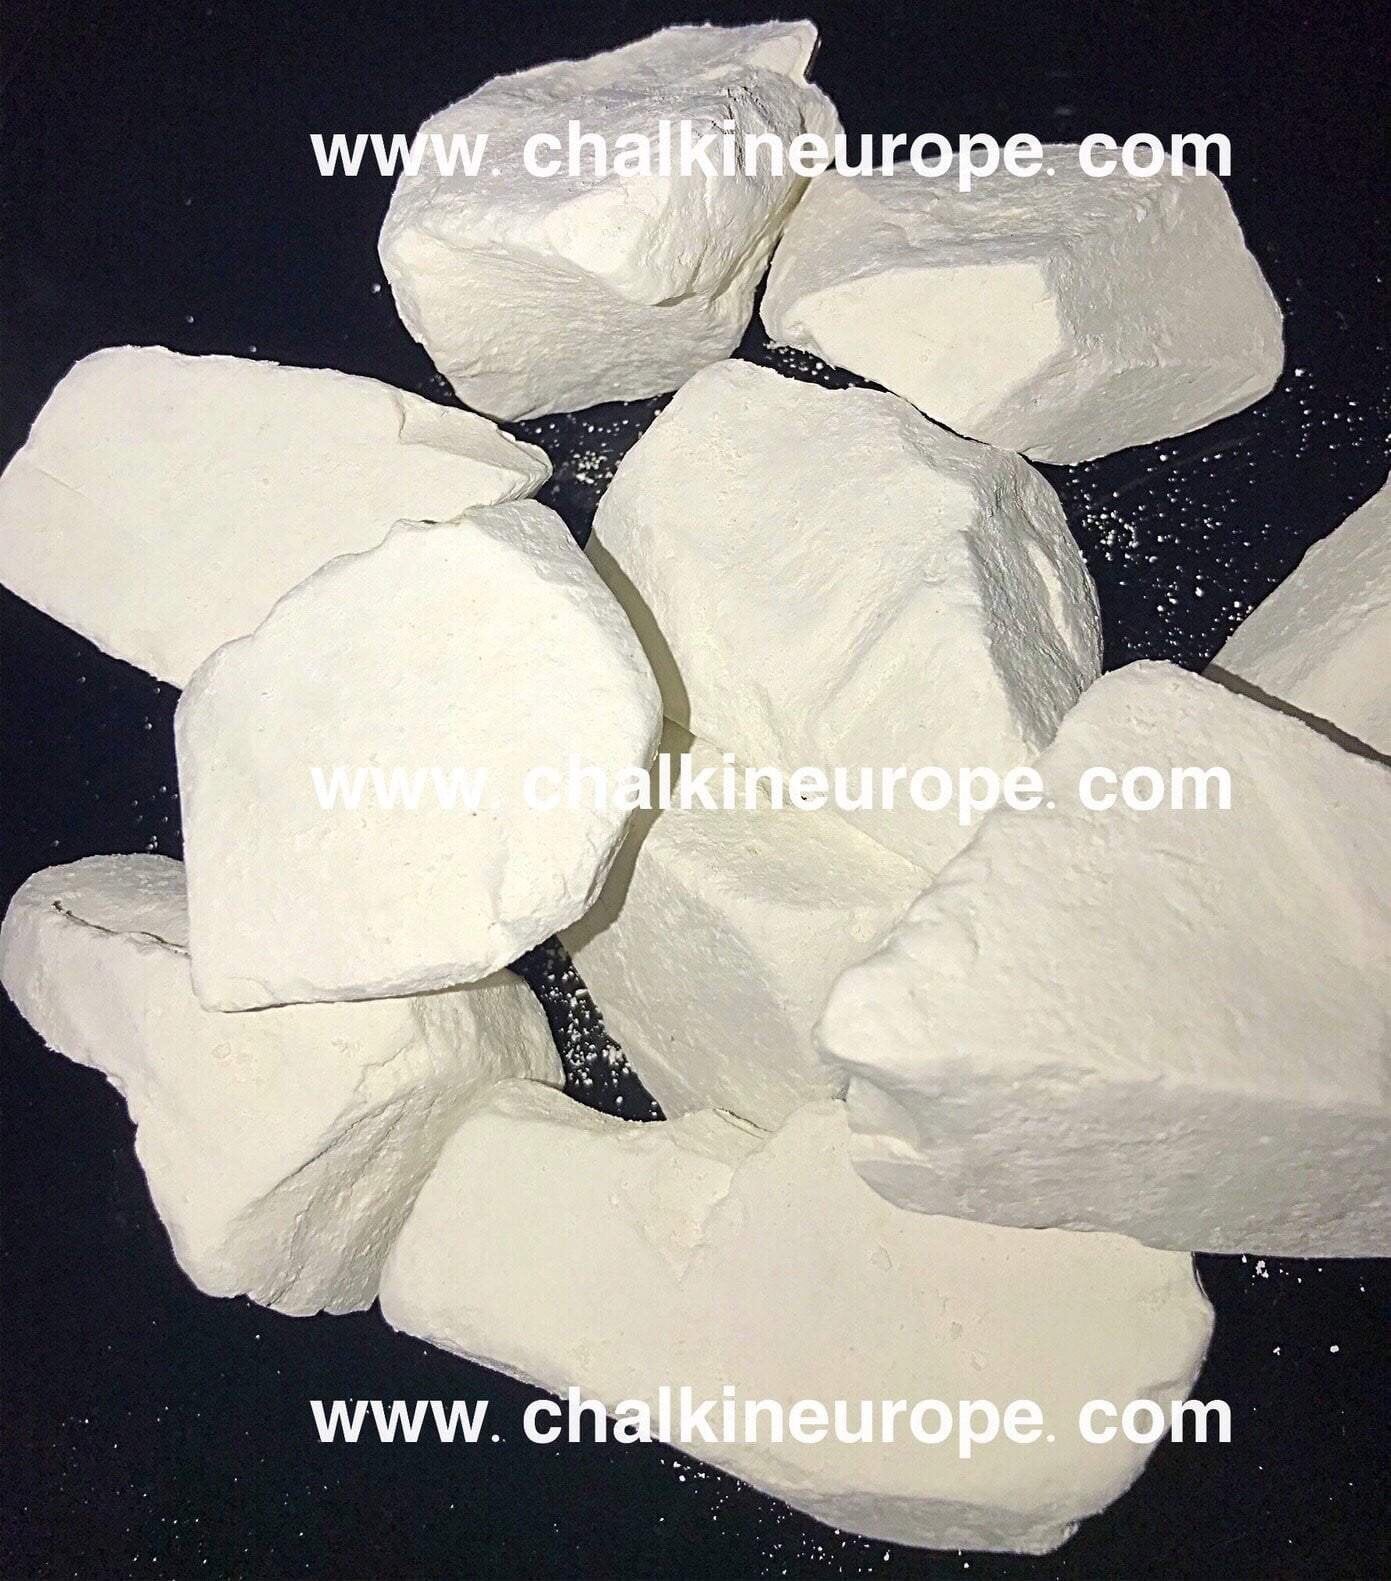 KRAM Edible Chalk Chunks (Lump) Natural for Eating (Food), 1 Lb (450 G)